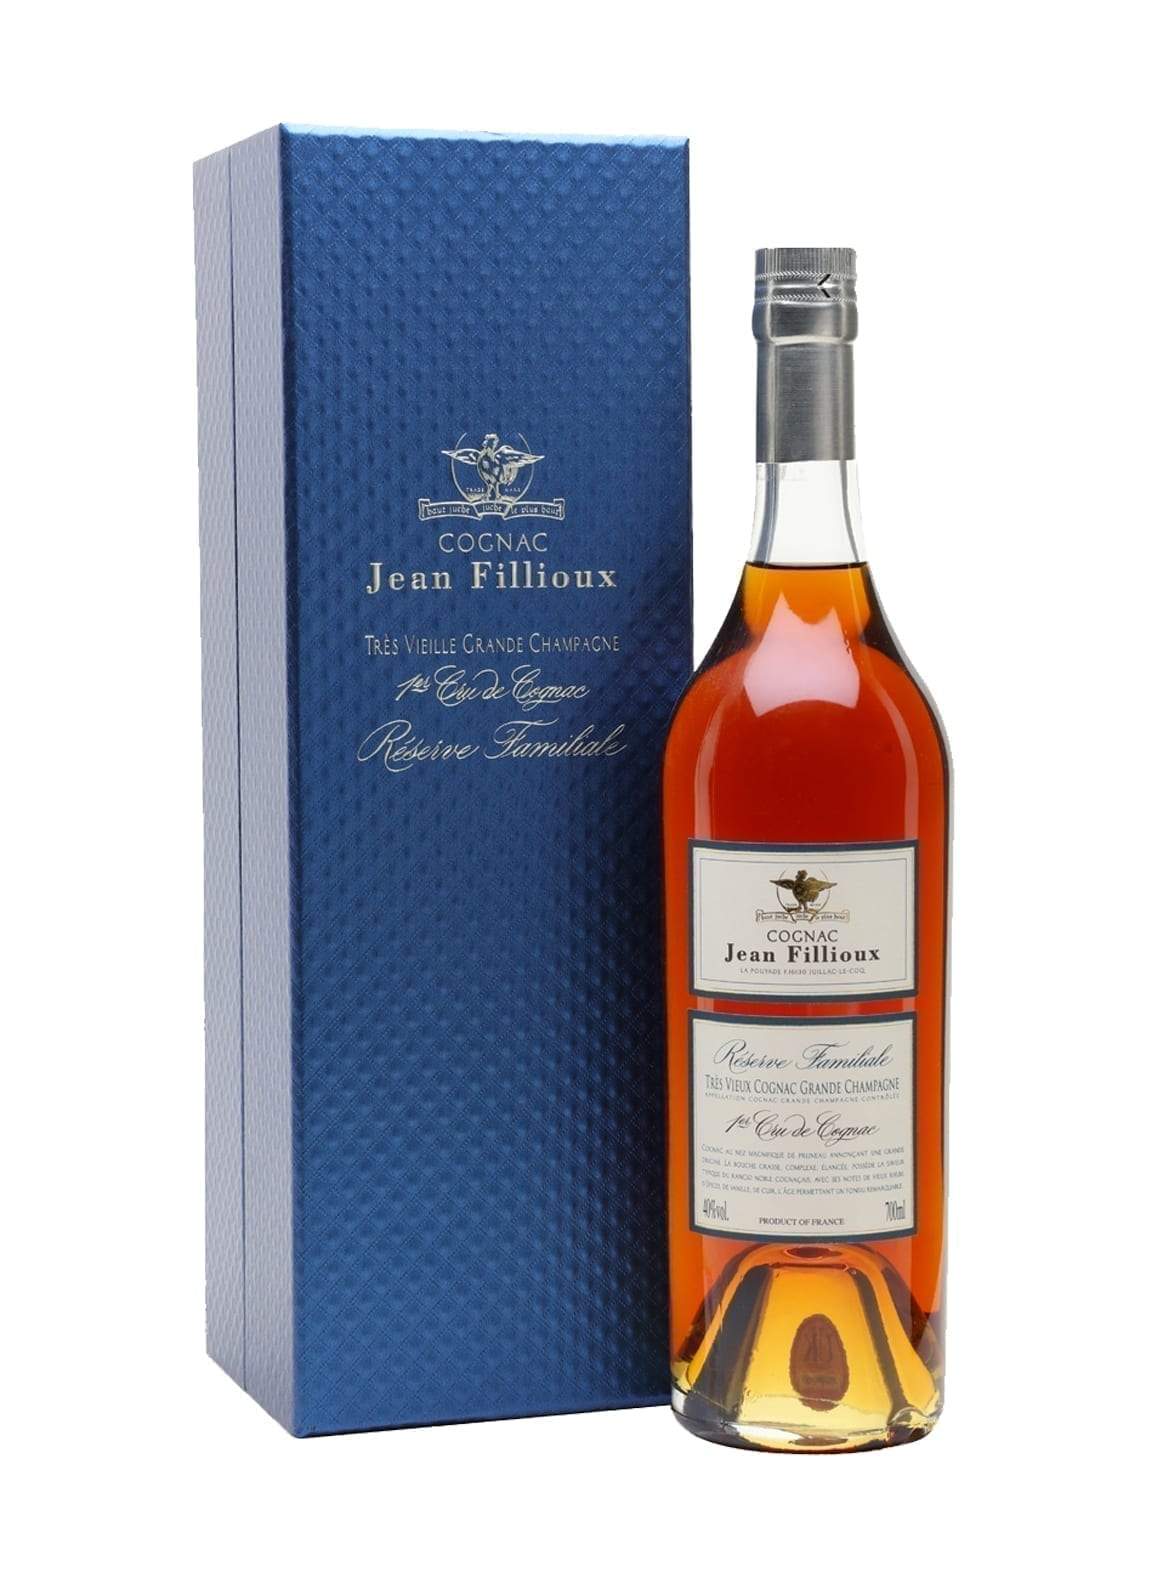 Jean Fillioux Cognac 'Reserve Familiale' Grande Champagne 1er Cru 50 years+ 40% 700ml | Brandy | Shop online at Spirits of France